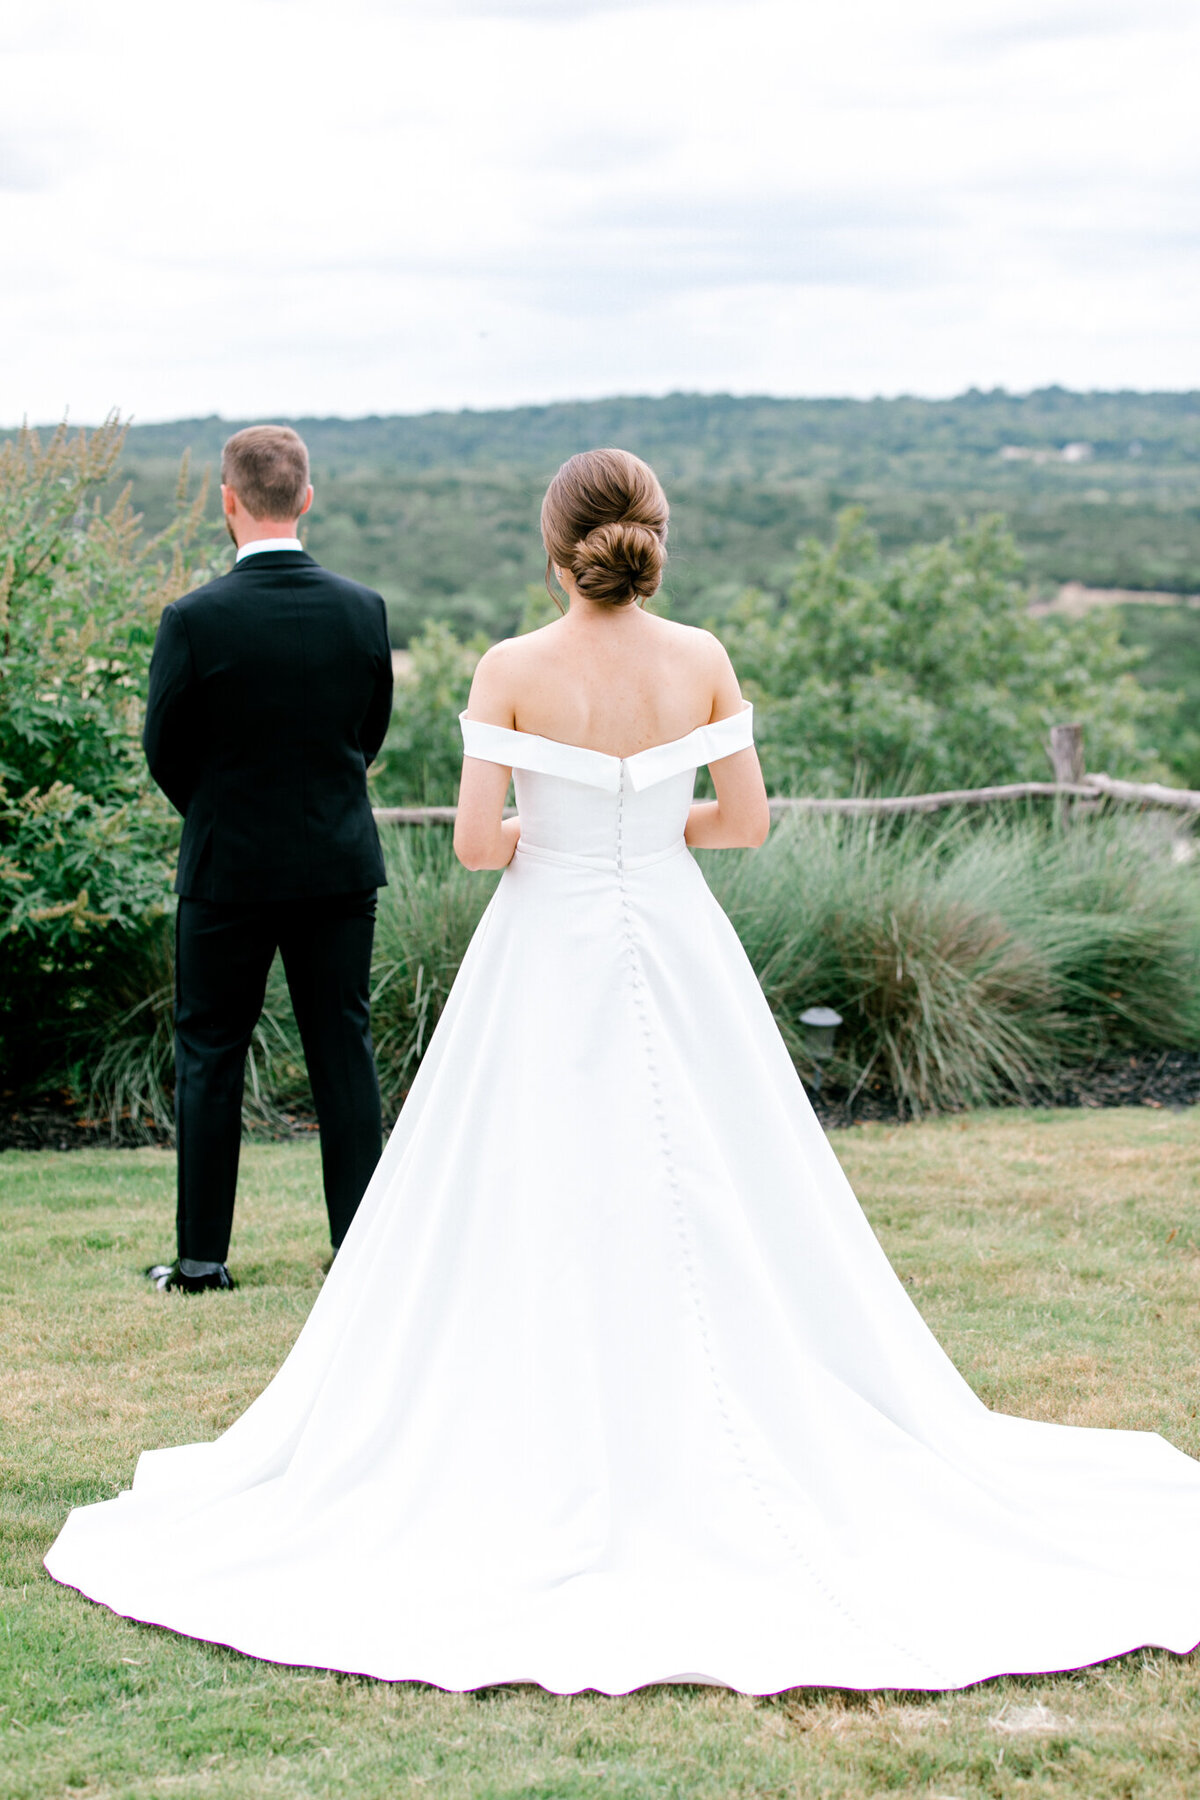 Lexi Broughton & Garrett Greer Wedding at Dove Ridge Vineyards | Sami Kathryn Photography | Dallas Wedding Photography-64